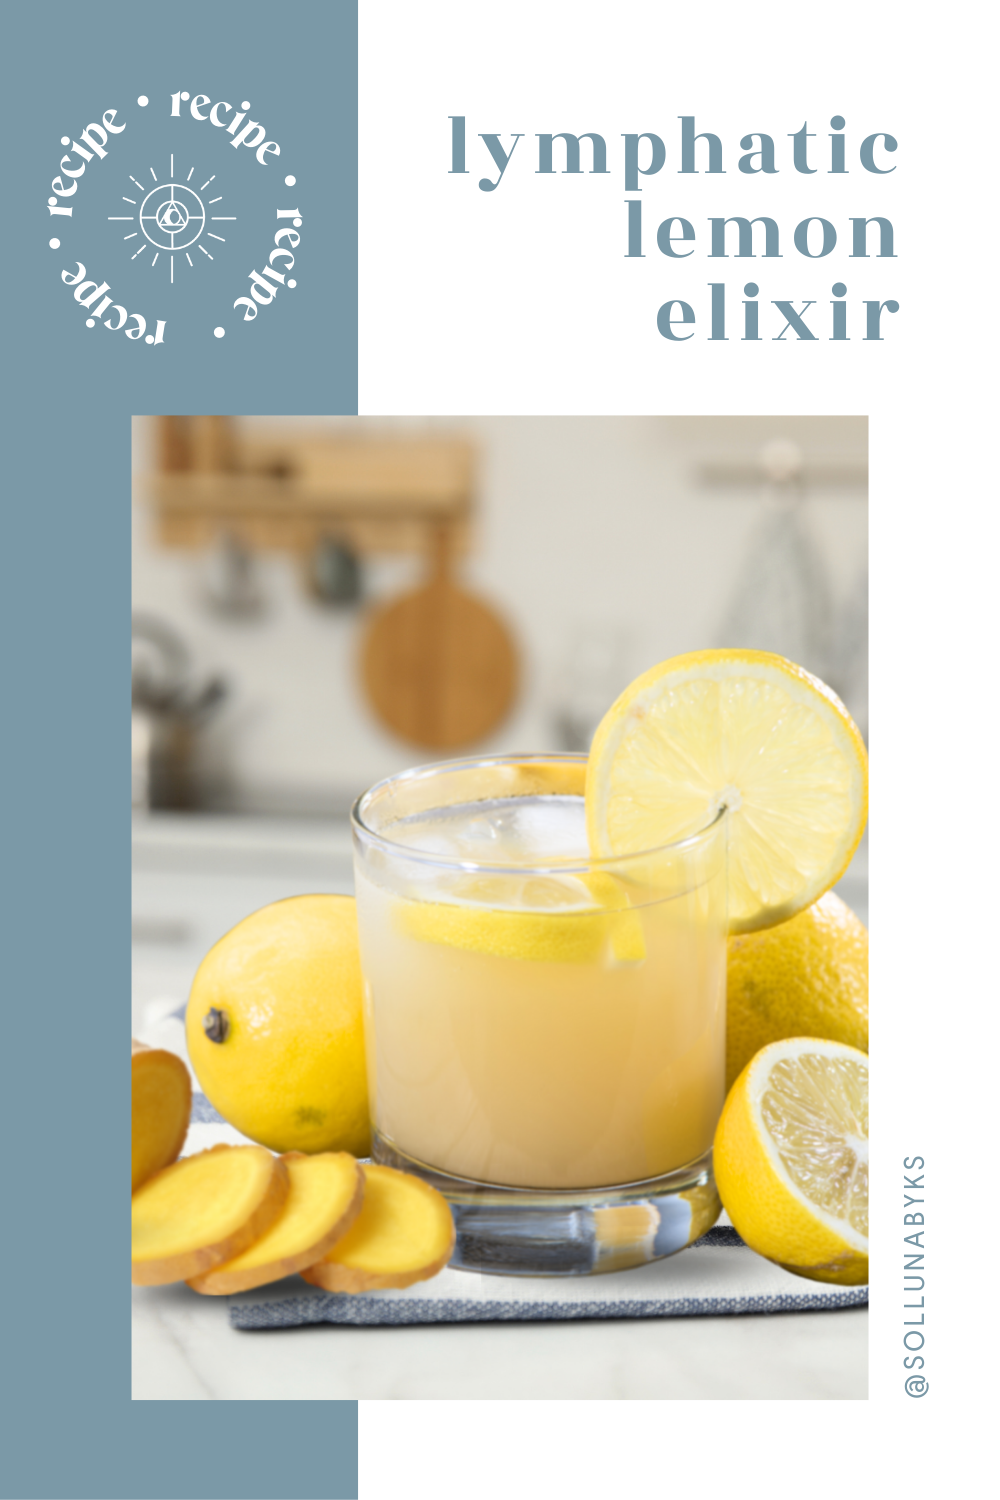 A serving of lymphatic lemon elixir.